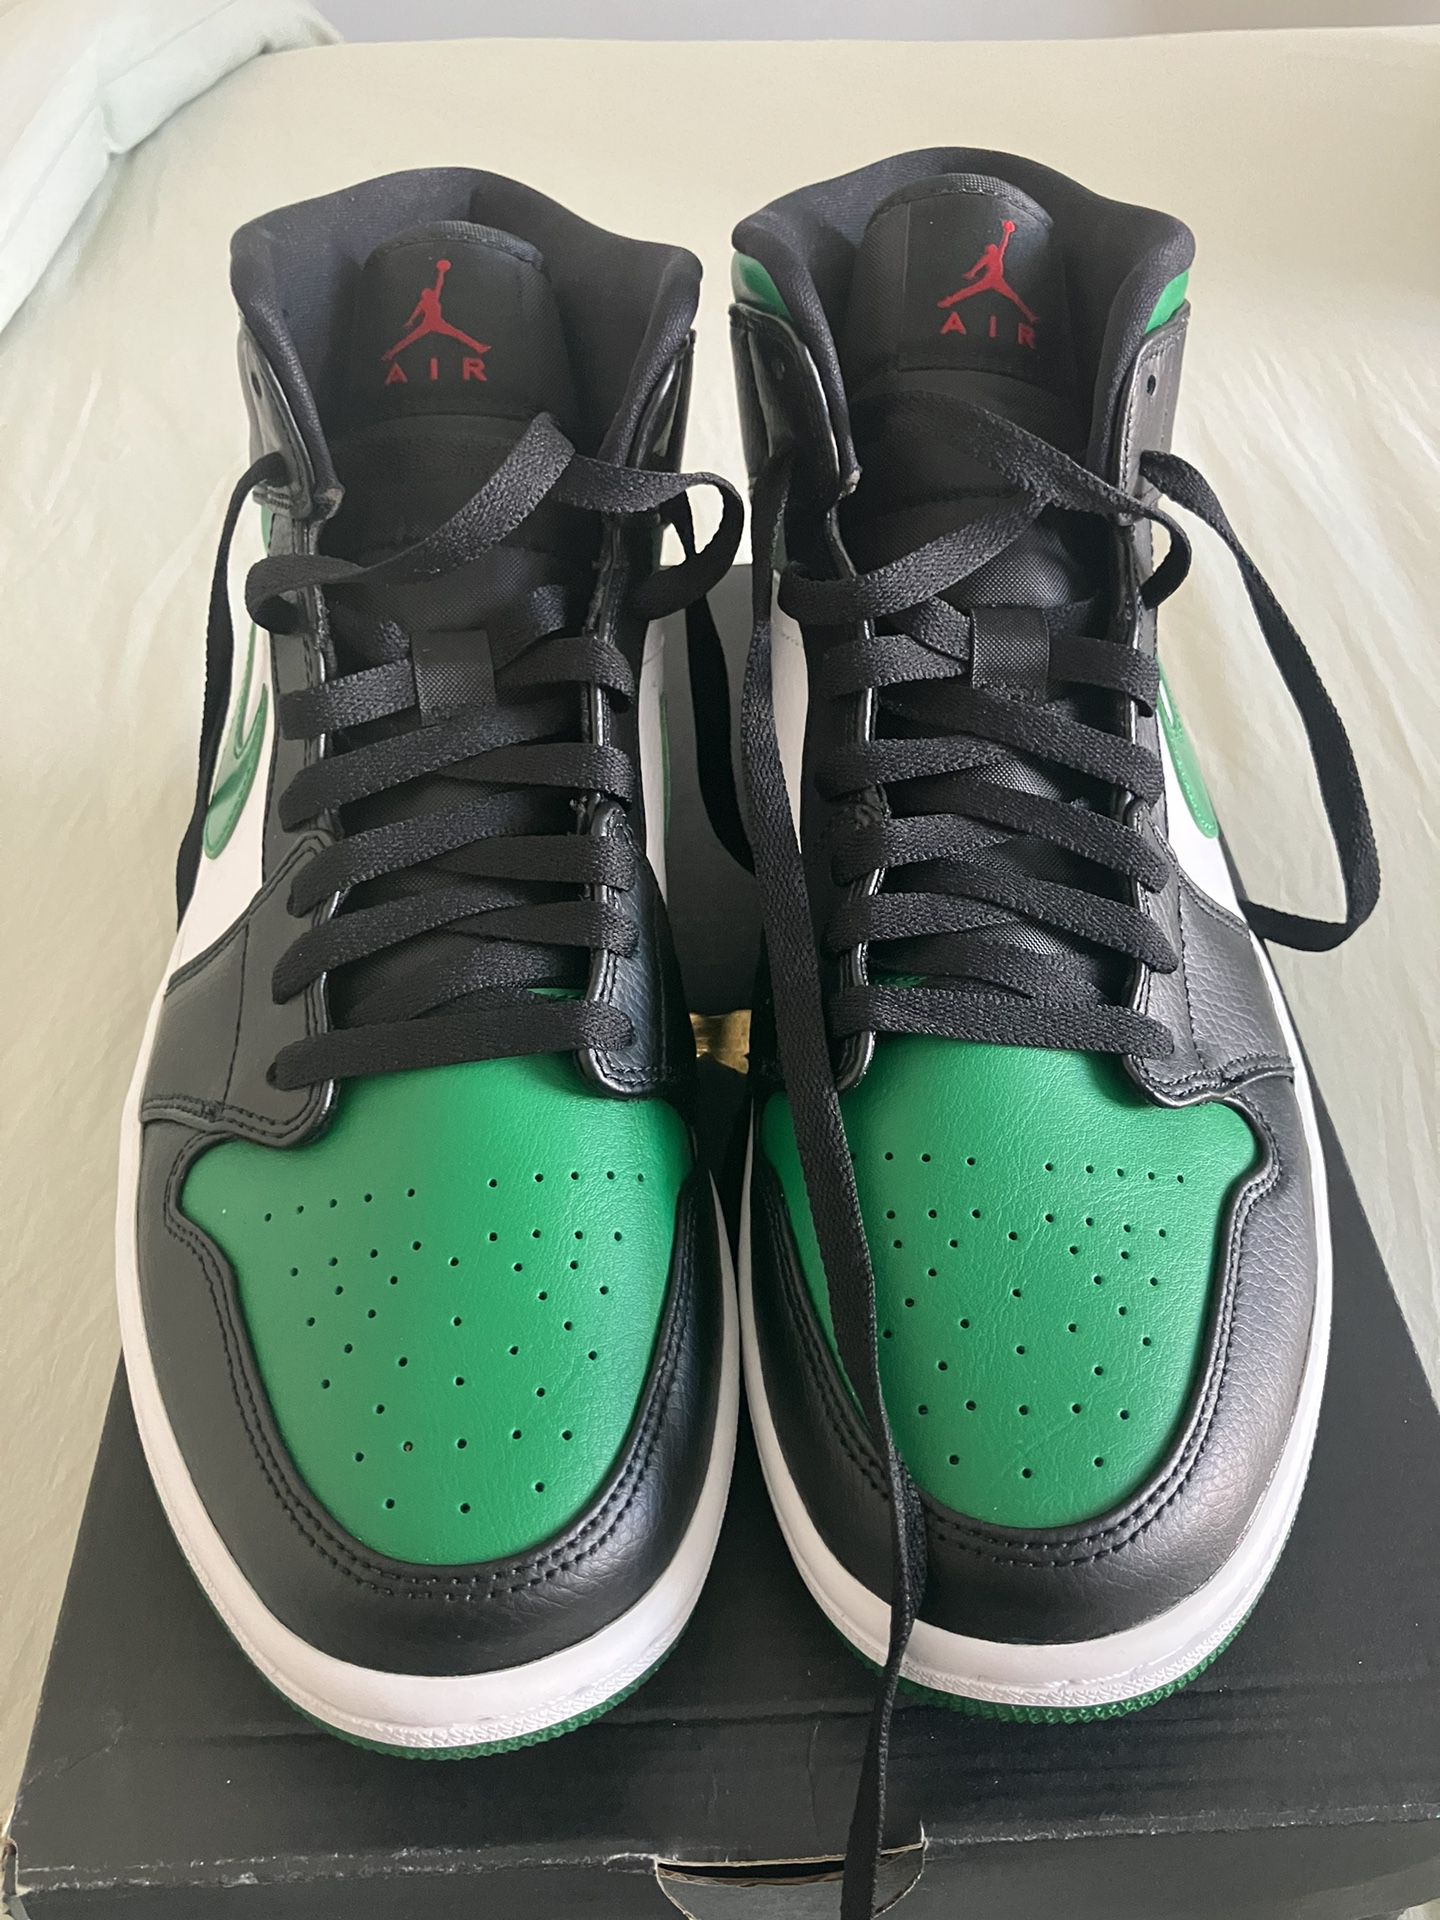 Air Jordan 1 Mid Size 11.5